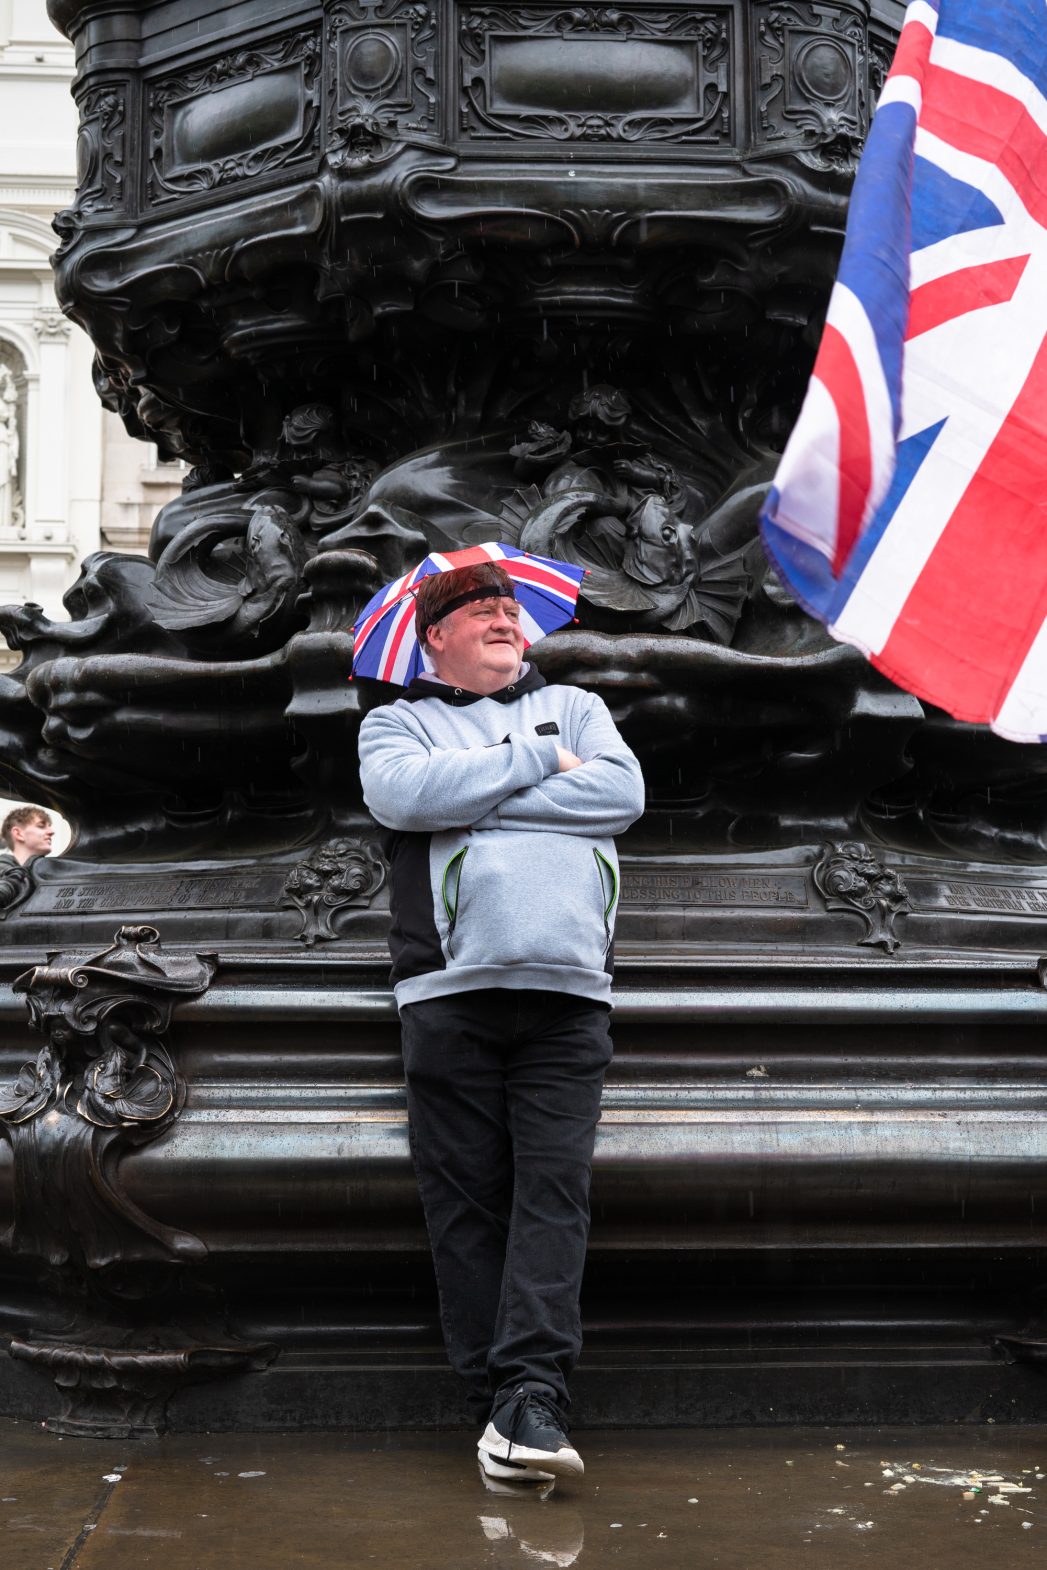 A man stood against a statue wearing a Union Jack umbrella hat.